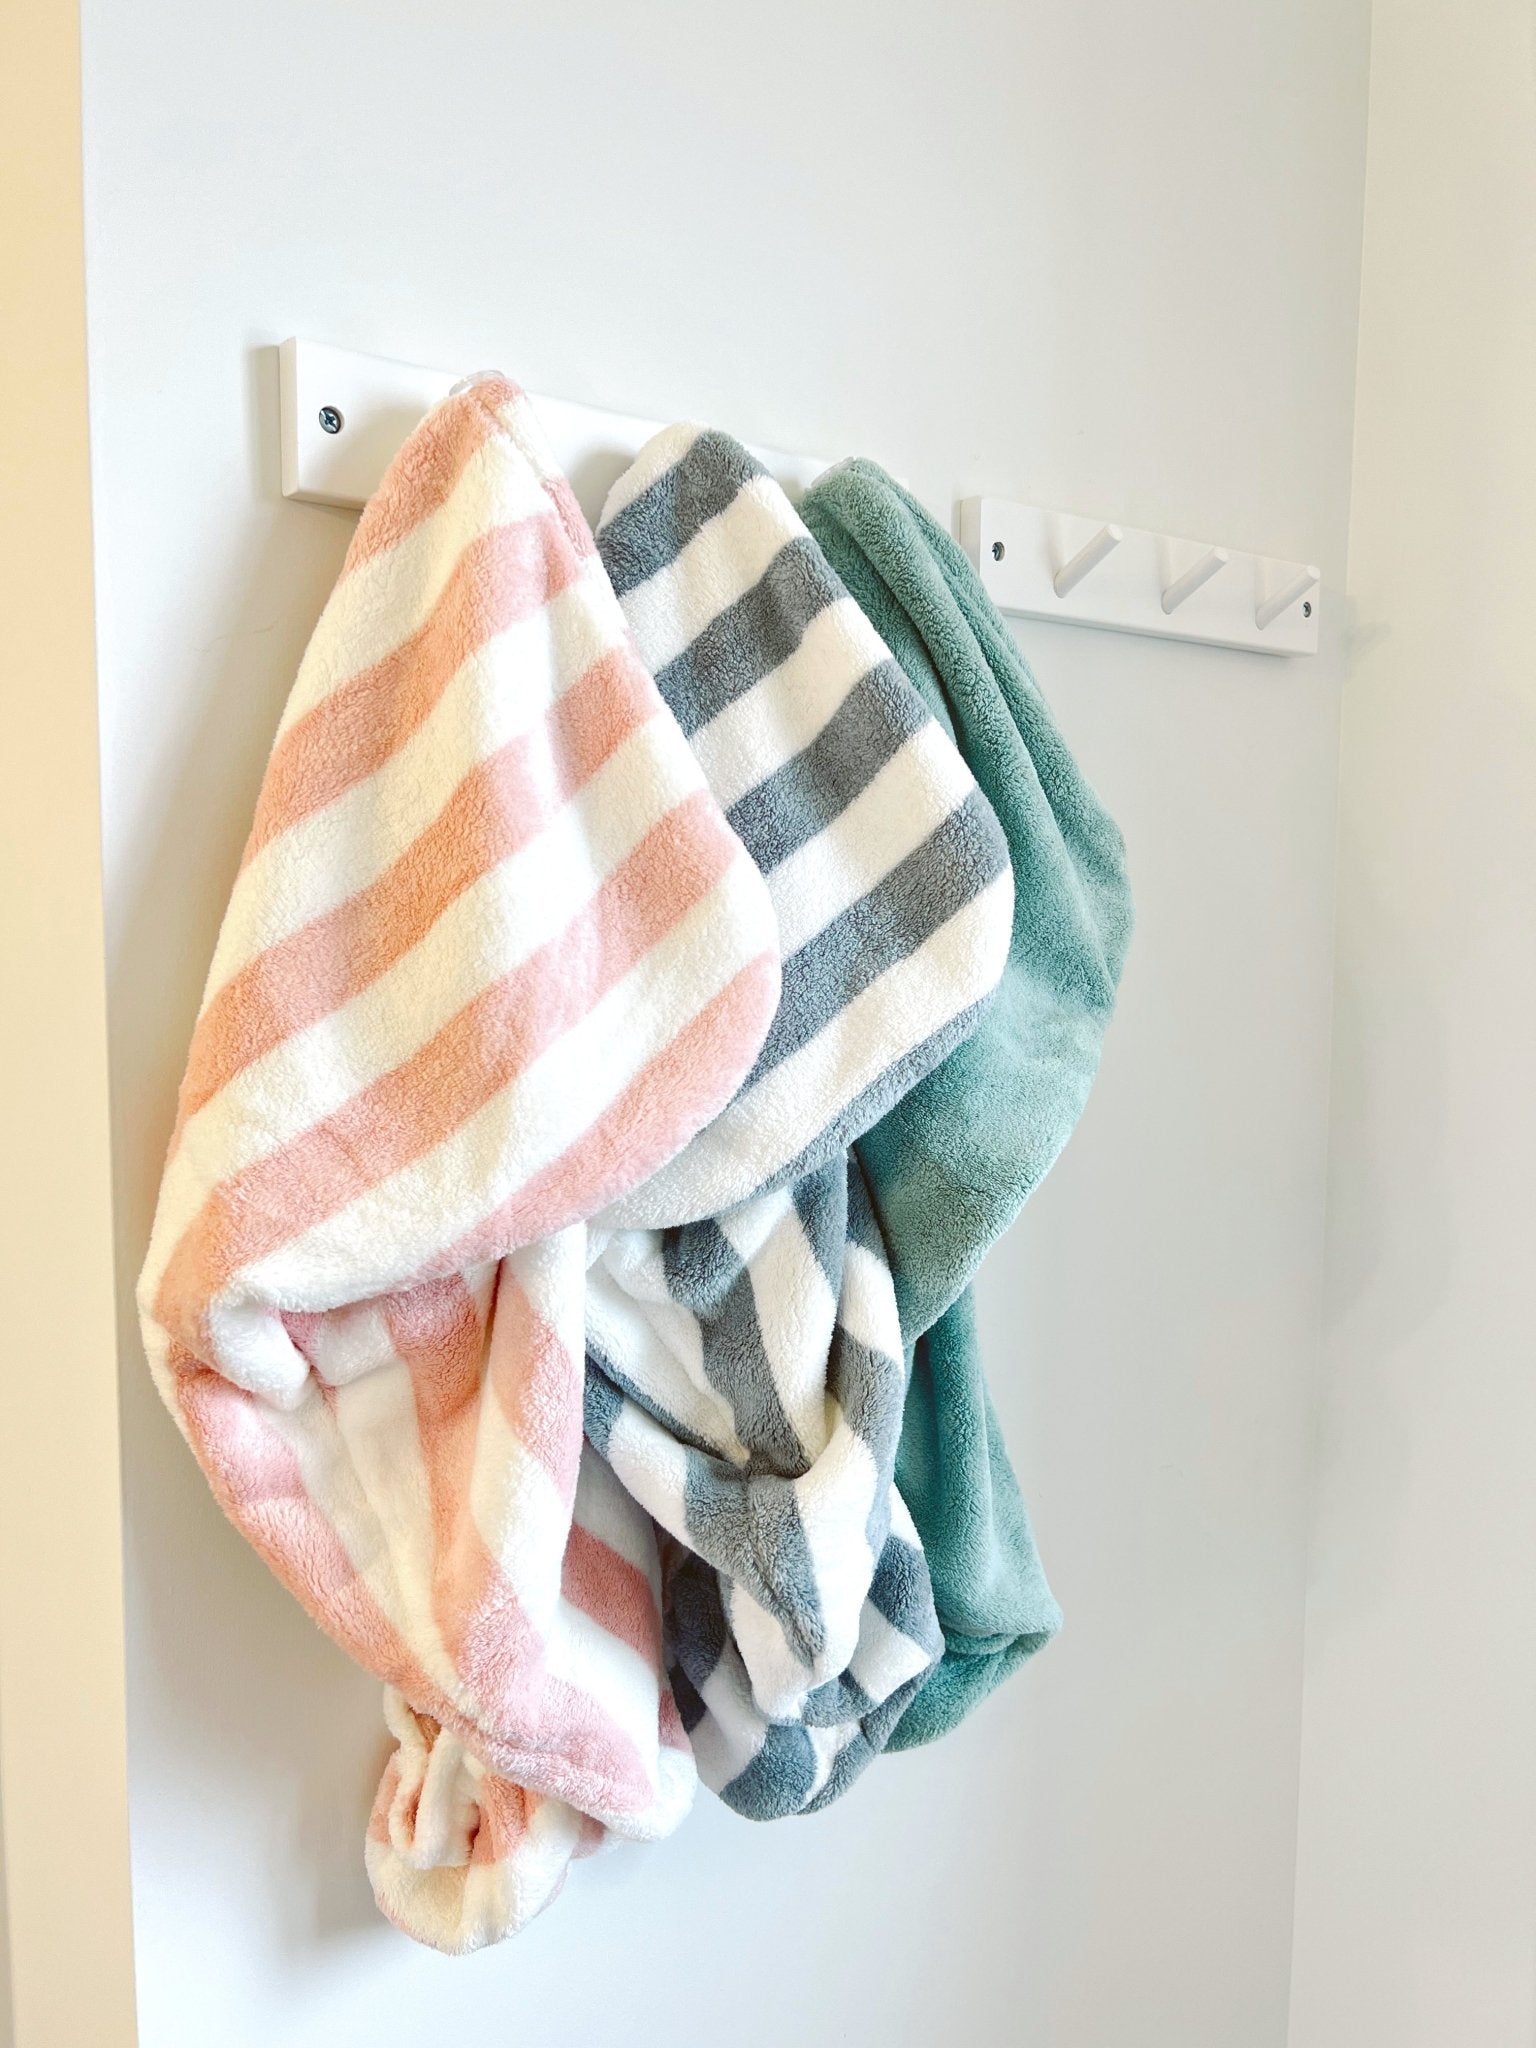 BUNDLE OF 3 - Microfiber Towel Wraps - Beyond Scrunchies